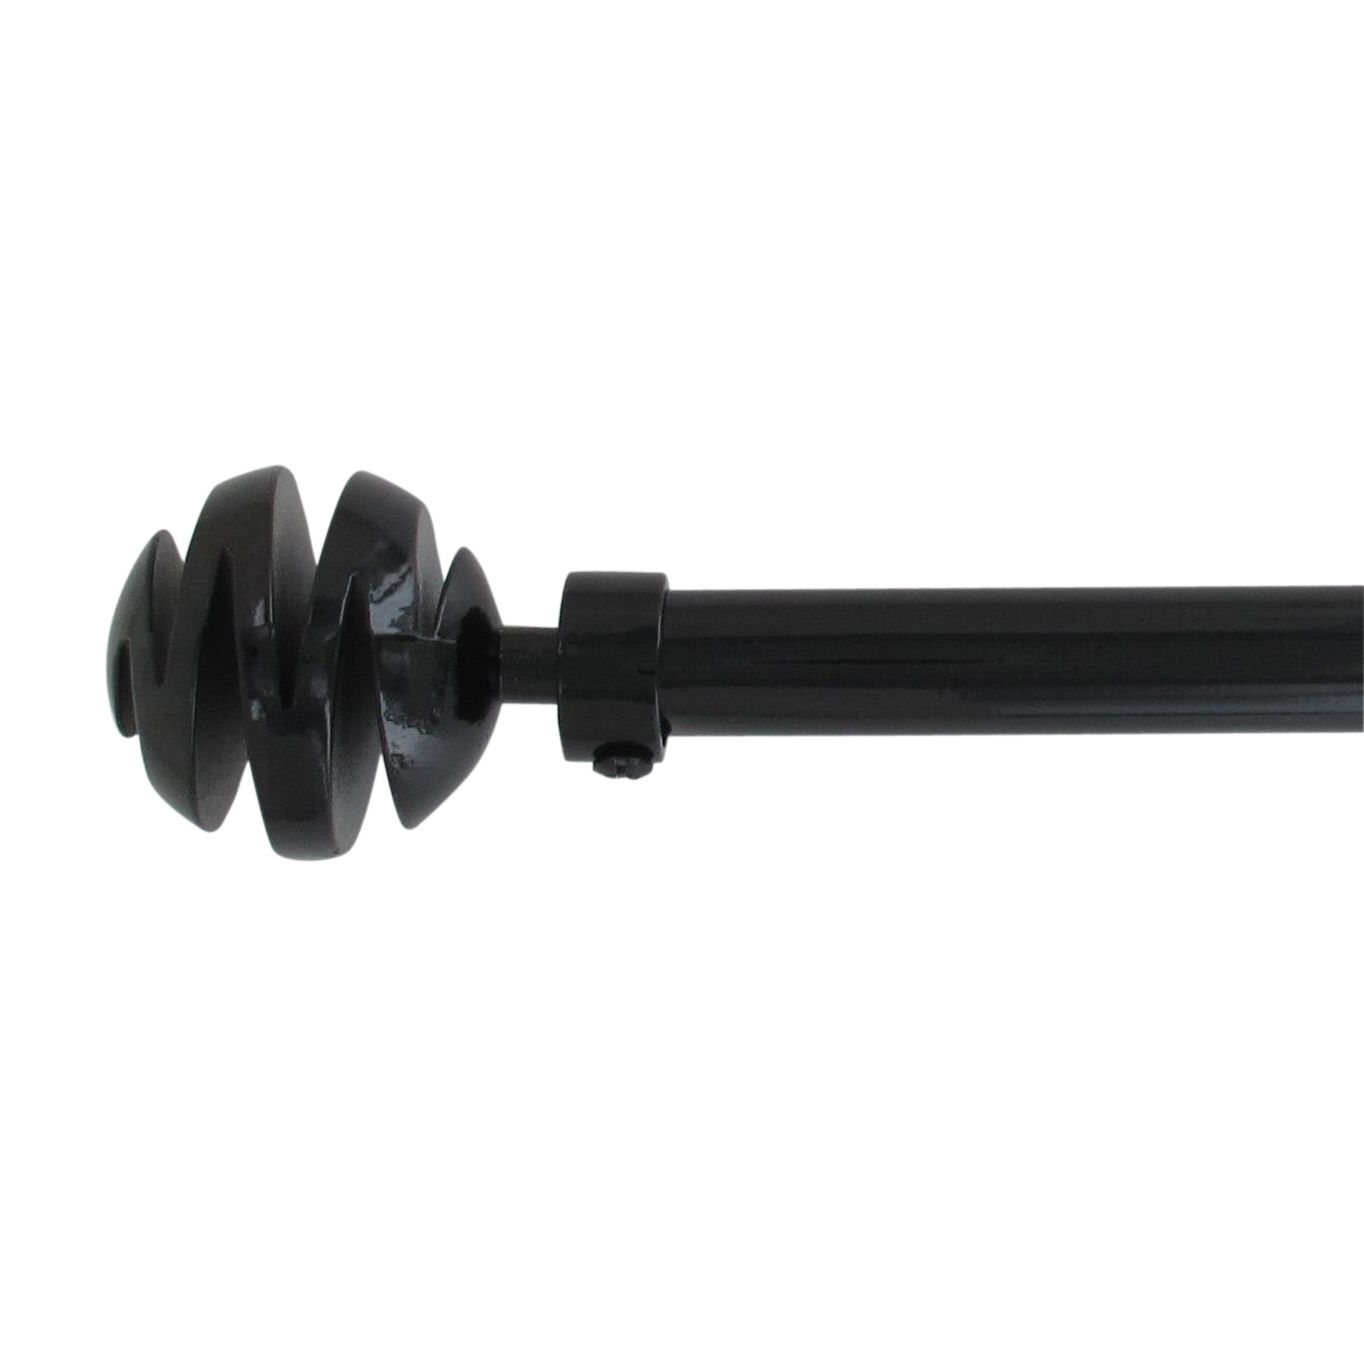 Kit de barra extensible (L210 - L380 cm / D19 mm) Brasserie Negro mate -  Accesorio y barra para cortina - Eminza